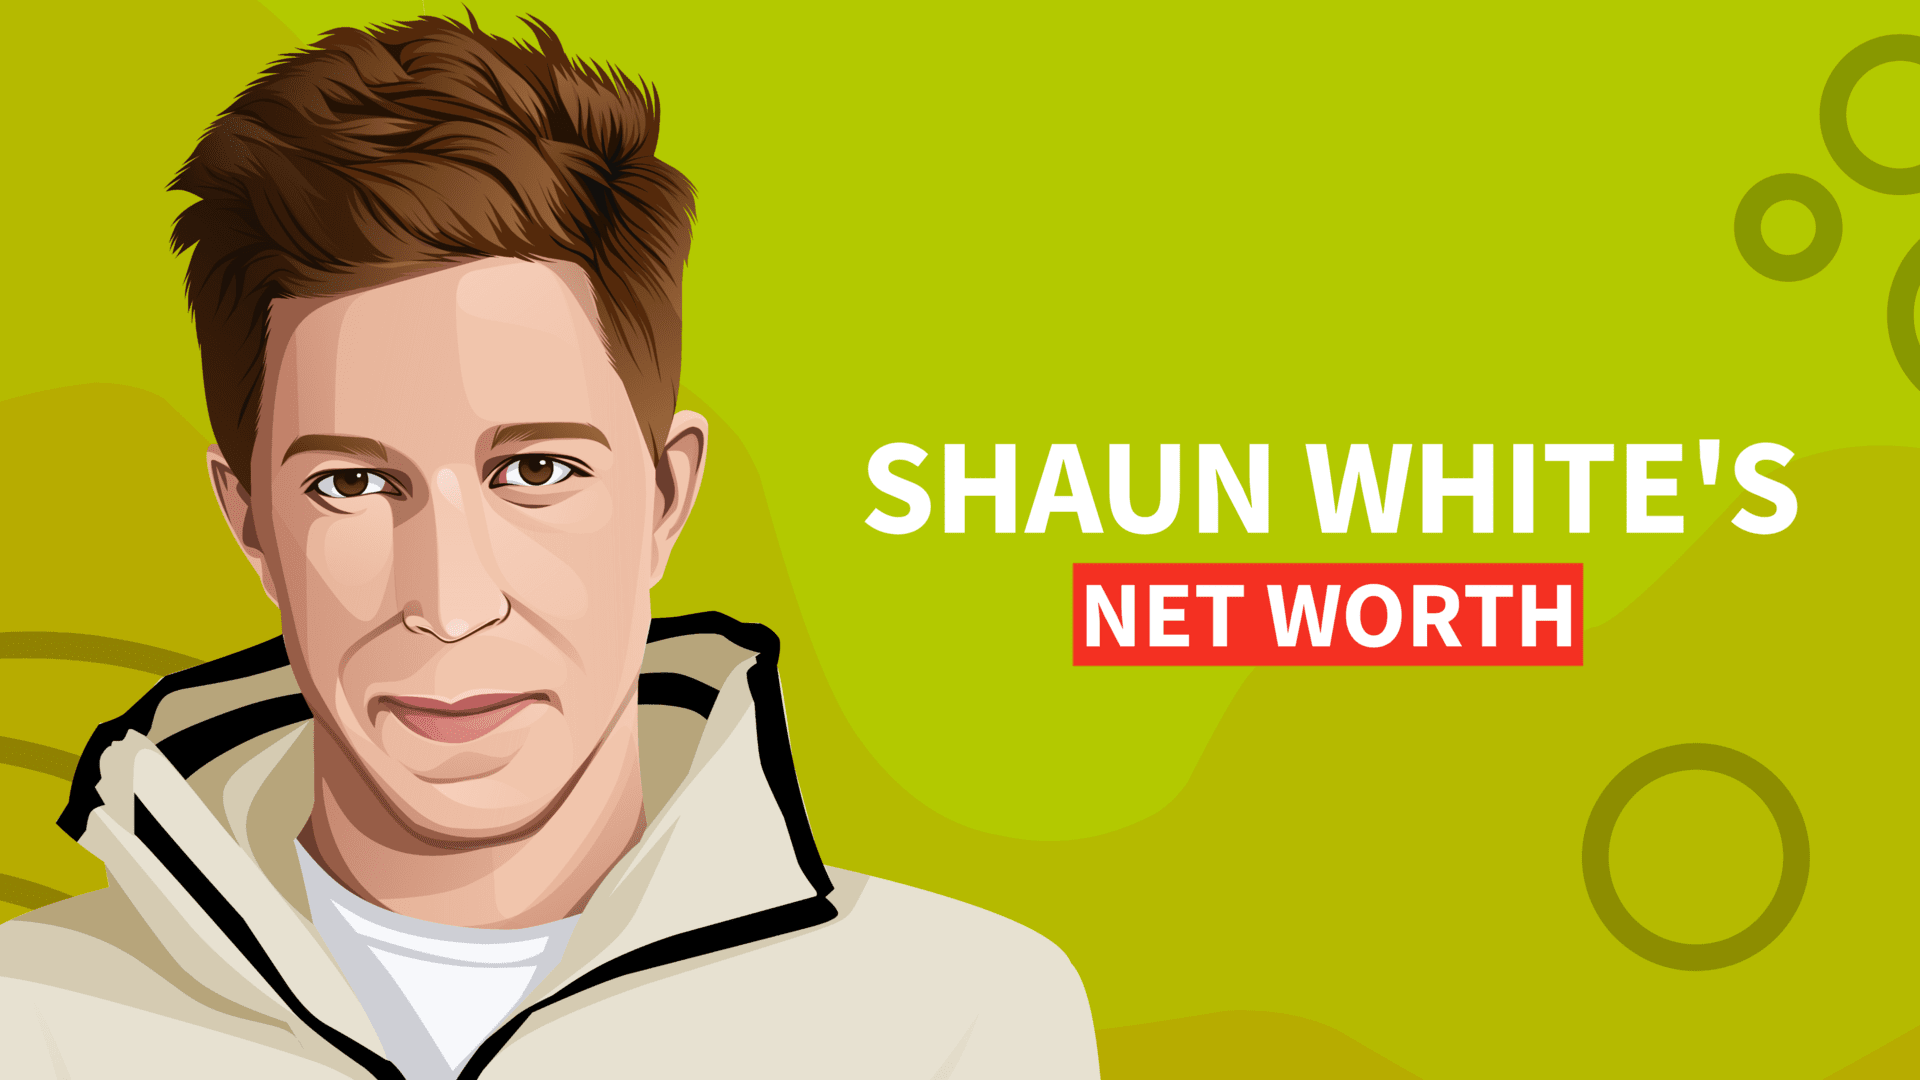 Shaun White Net Worth  Shaun white, Net worth, Olympic team